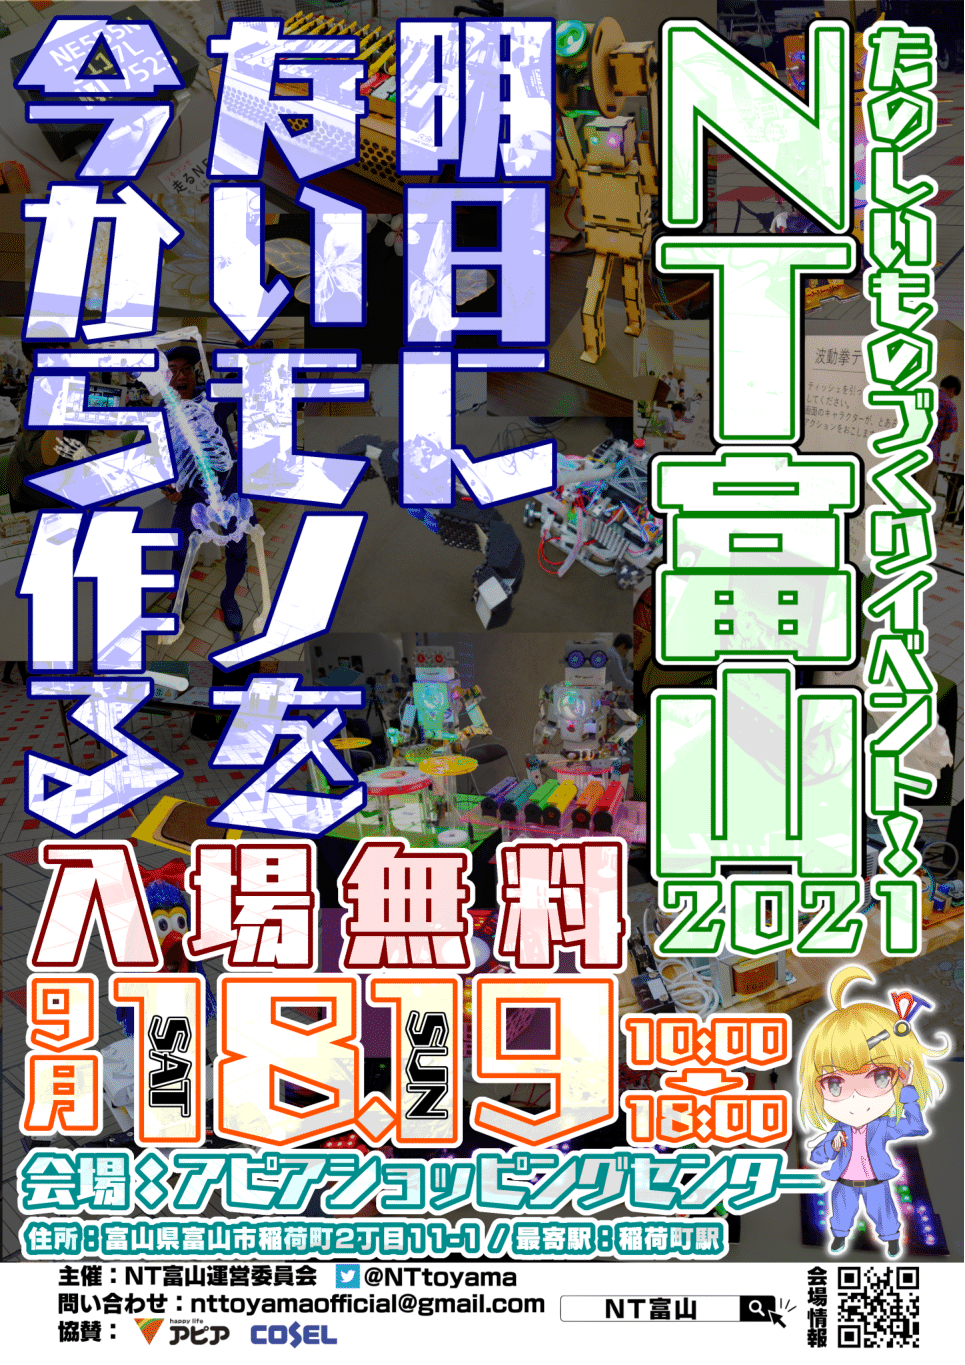 NT_Toyama2021_Poster.png